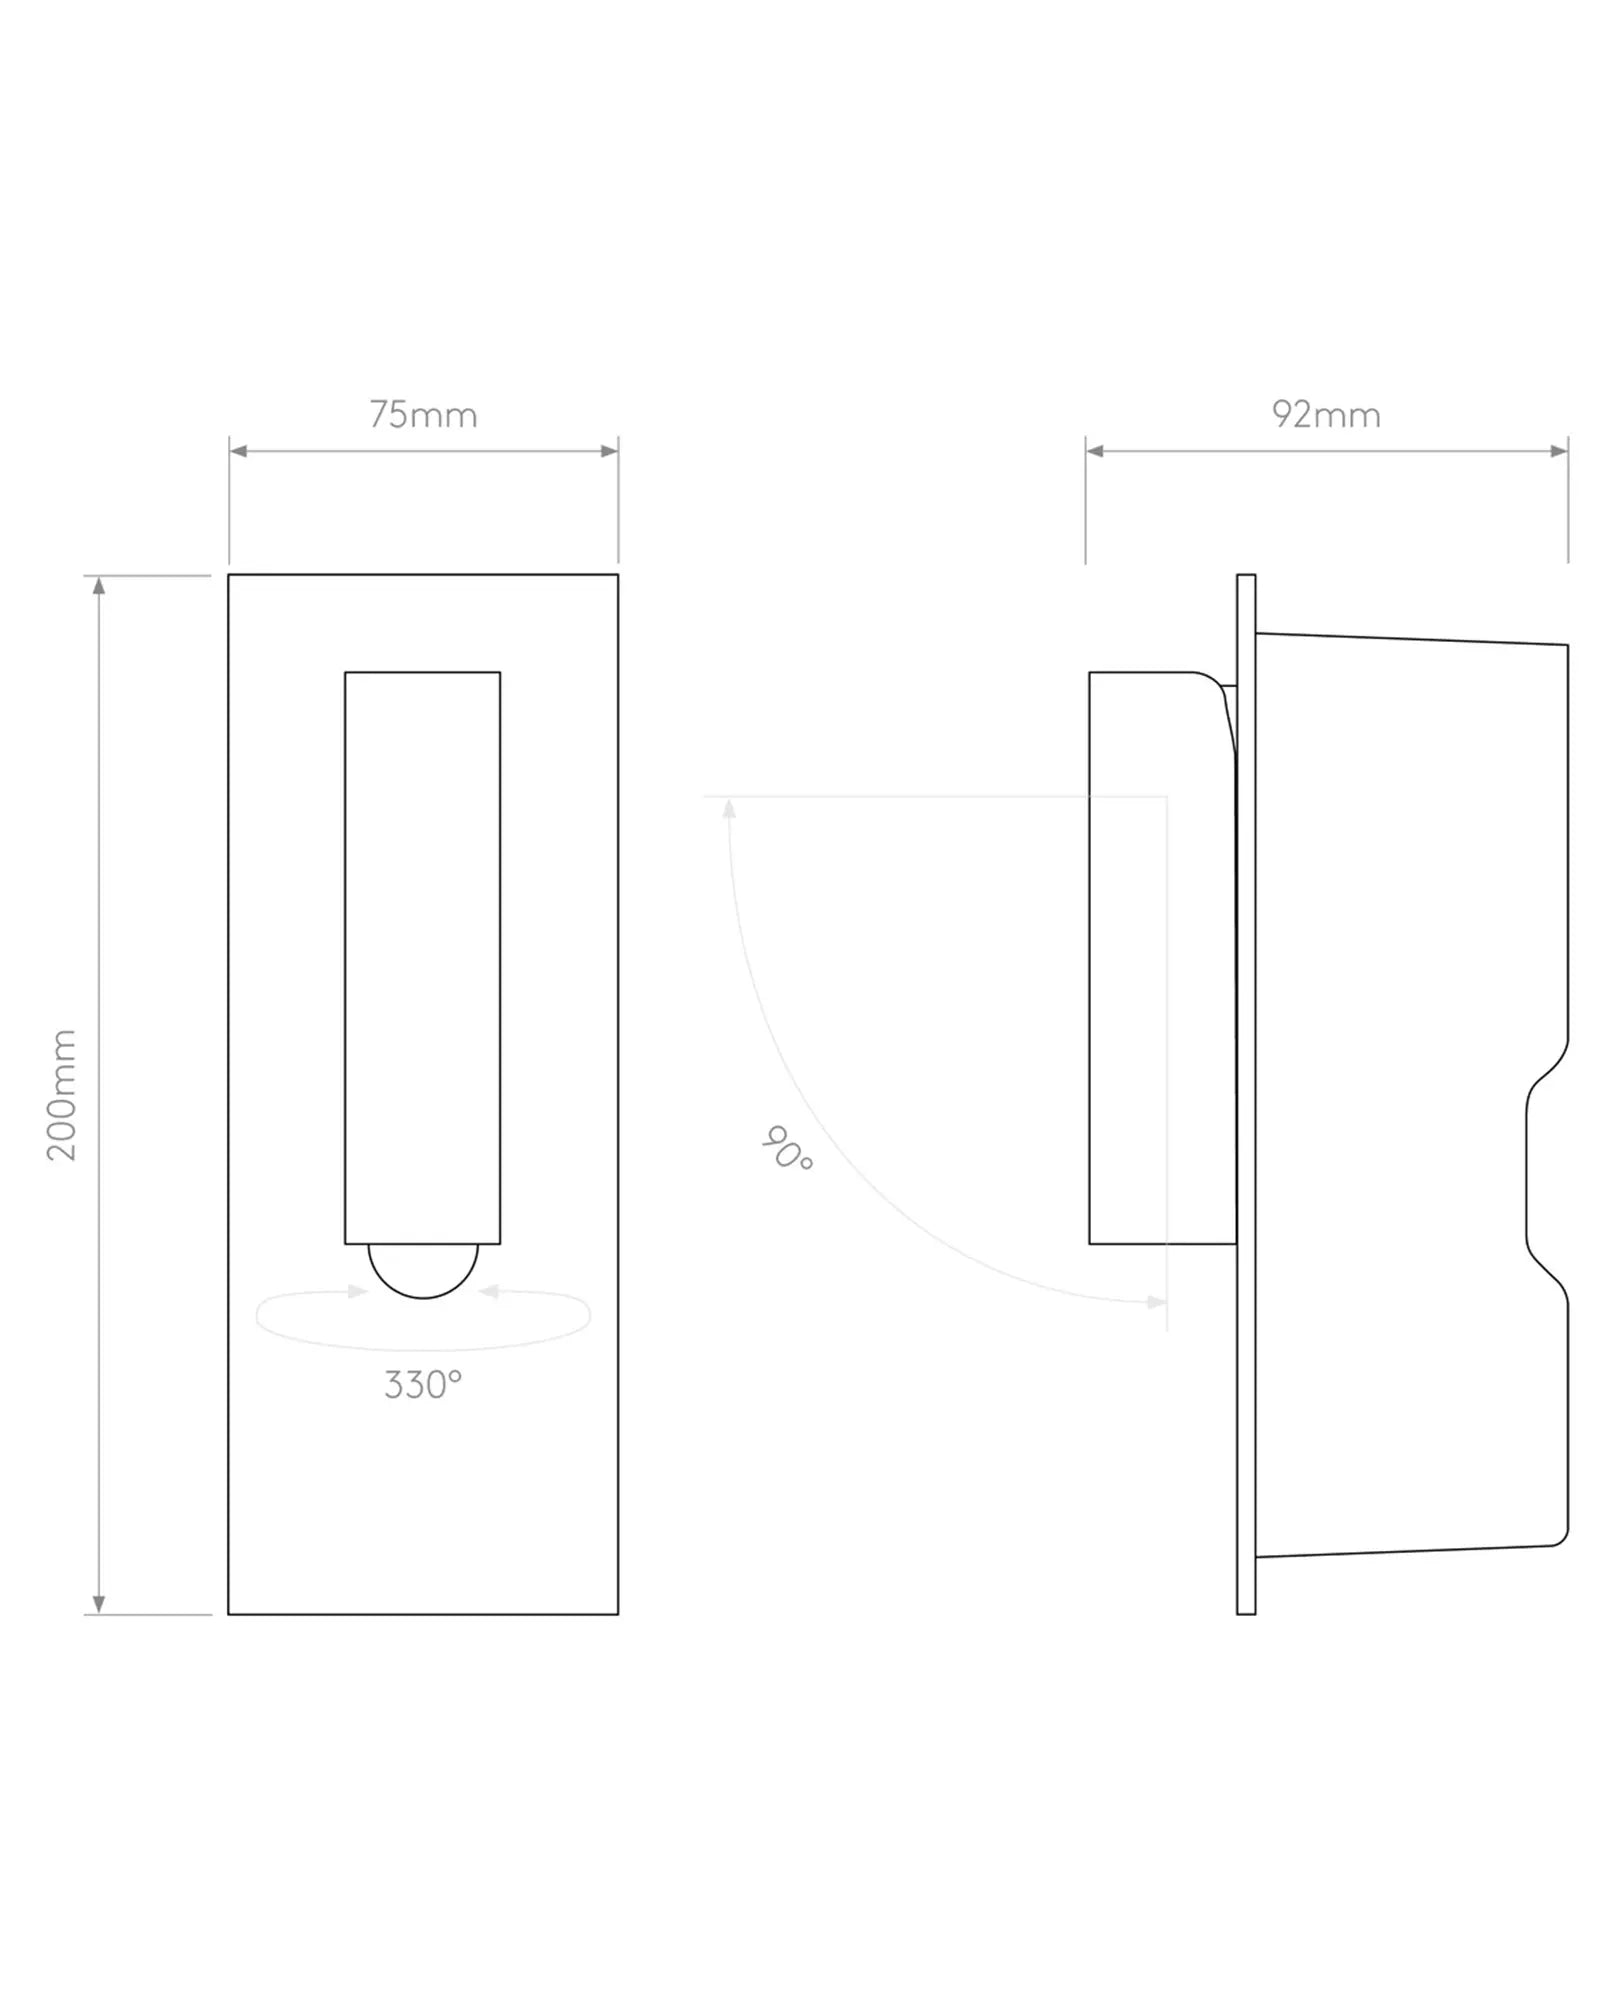 Fuse modern foldable minimal wall light sizes